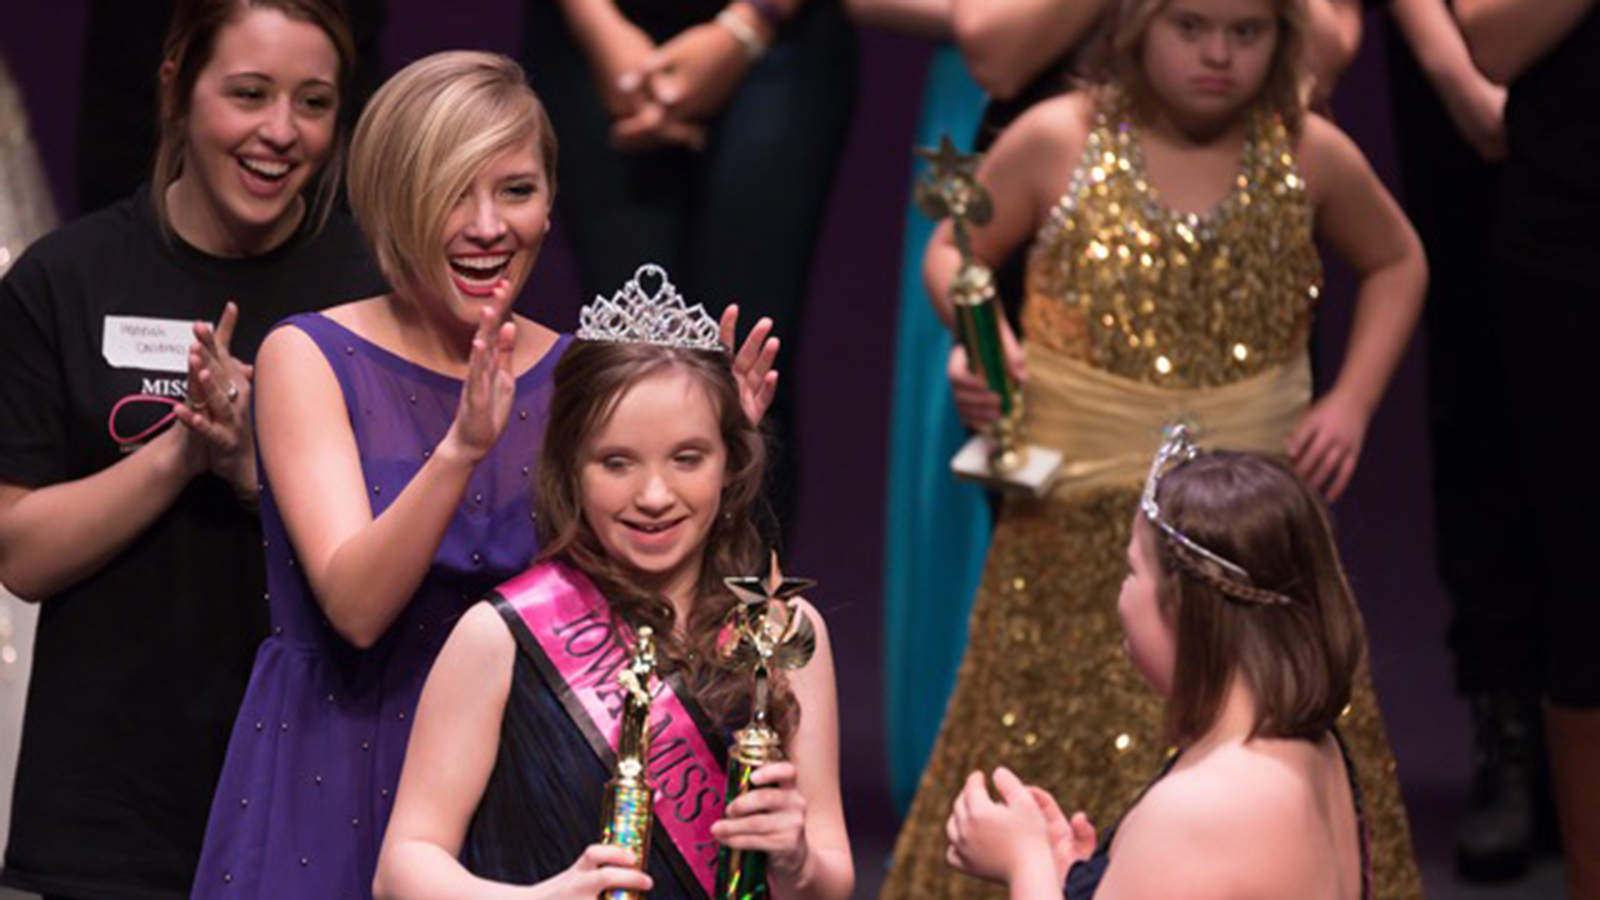 Maddie Lorenzen, a senior speech-language pathology major, crowns a queen at the Iowa Miss Amazing Pageant.